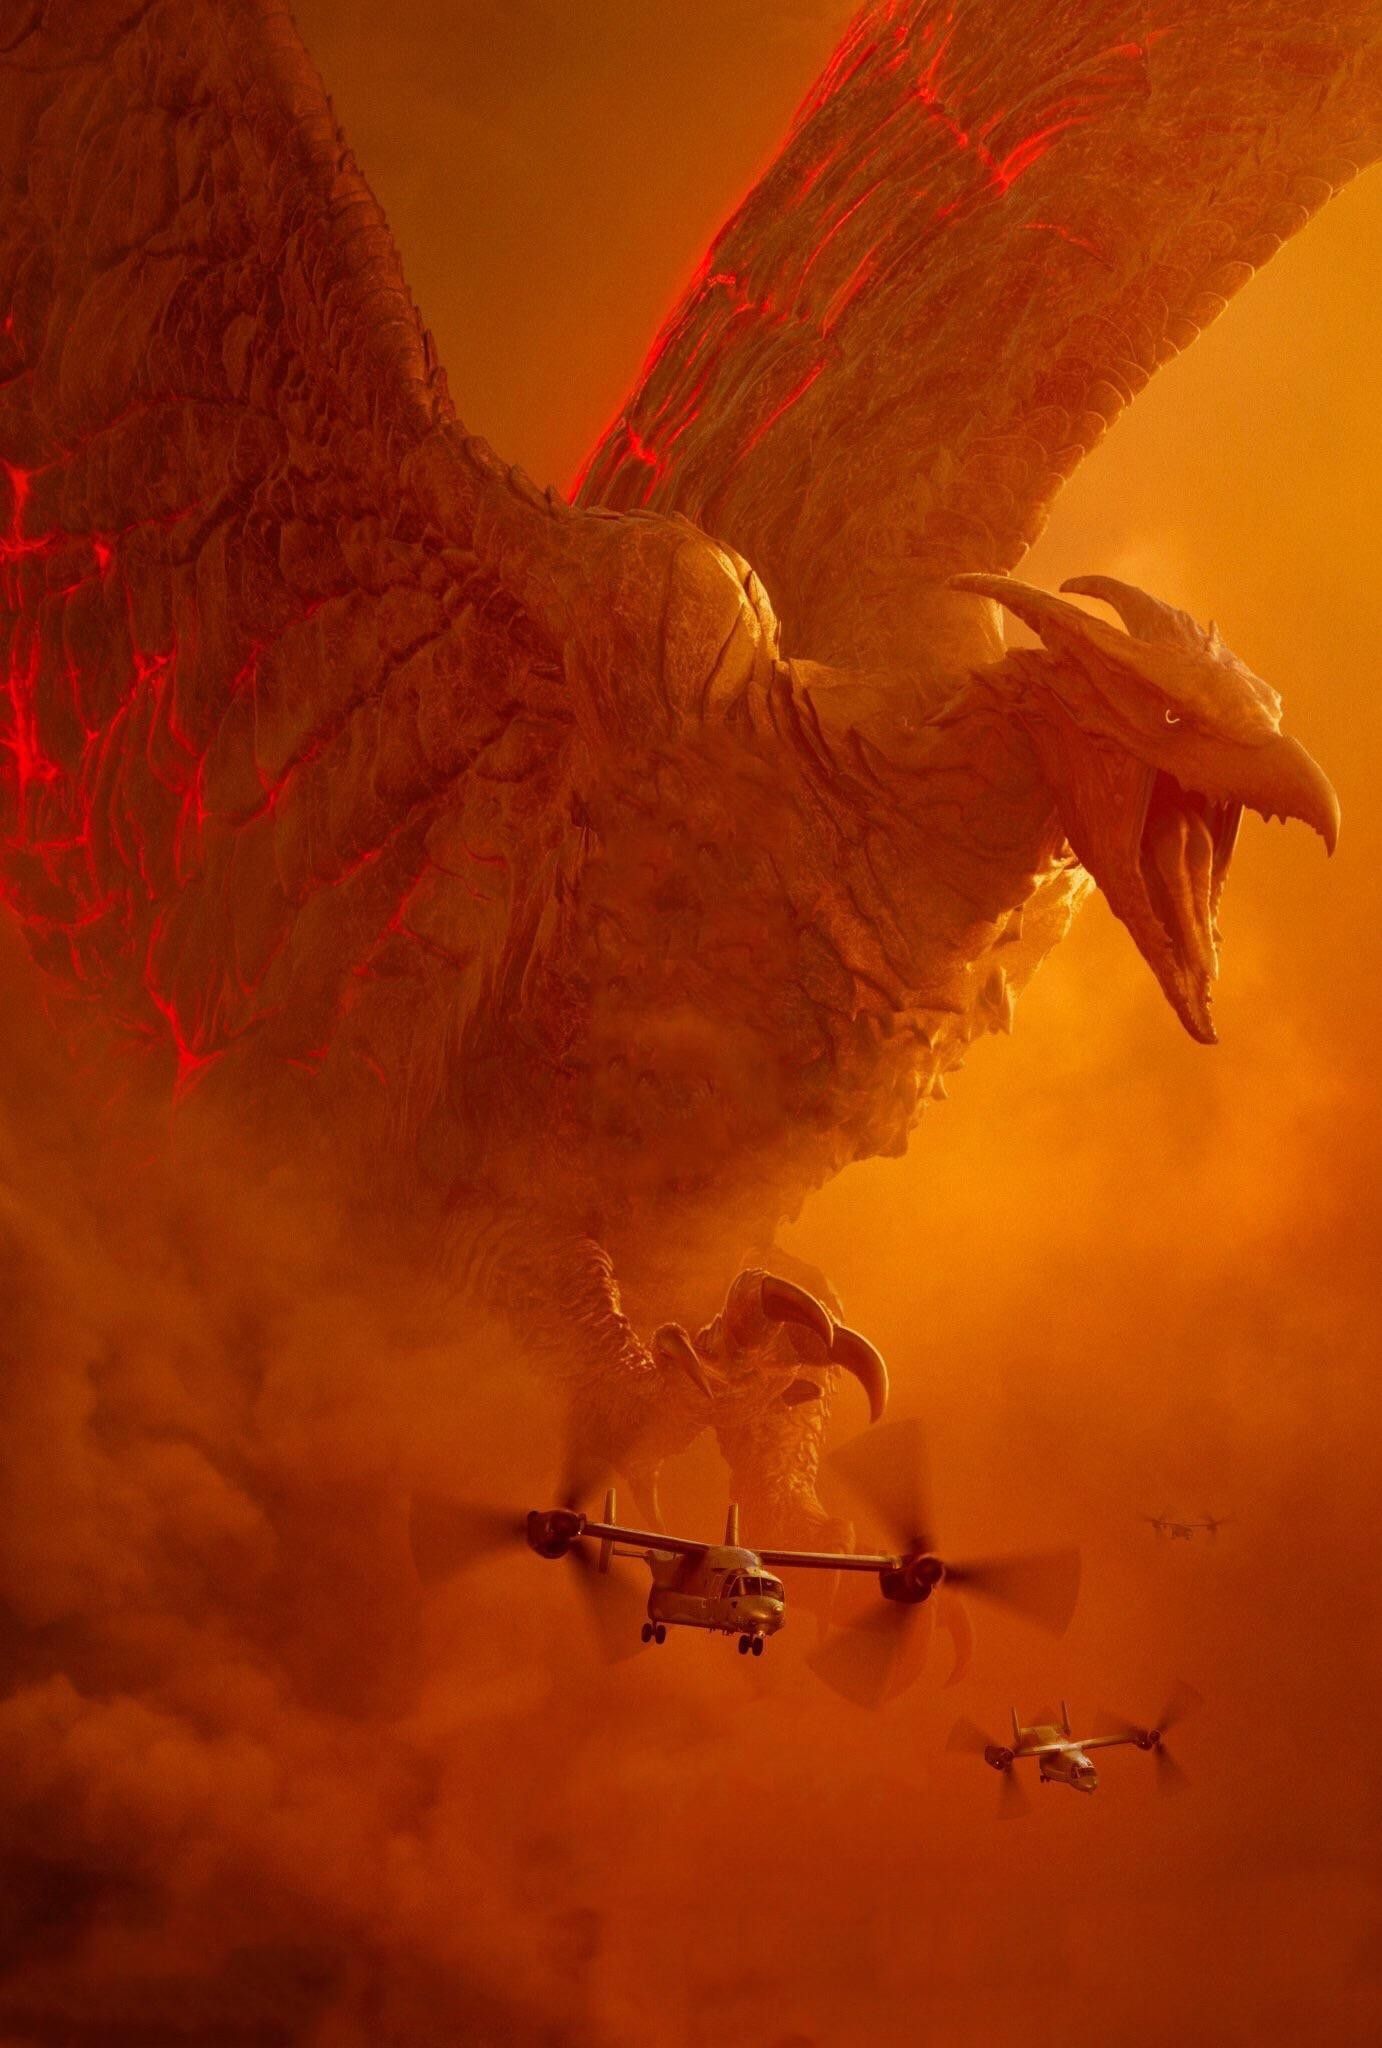 Official Rodan 2019 Poster Textless Godzilla in 2019 Godzilla